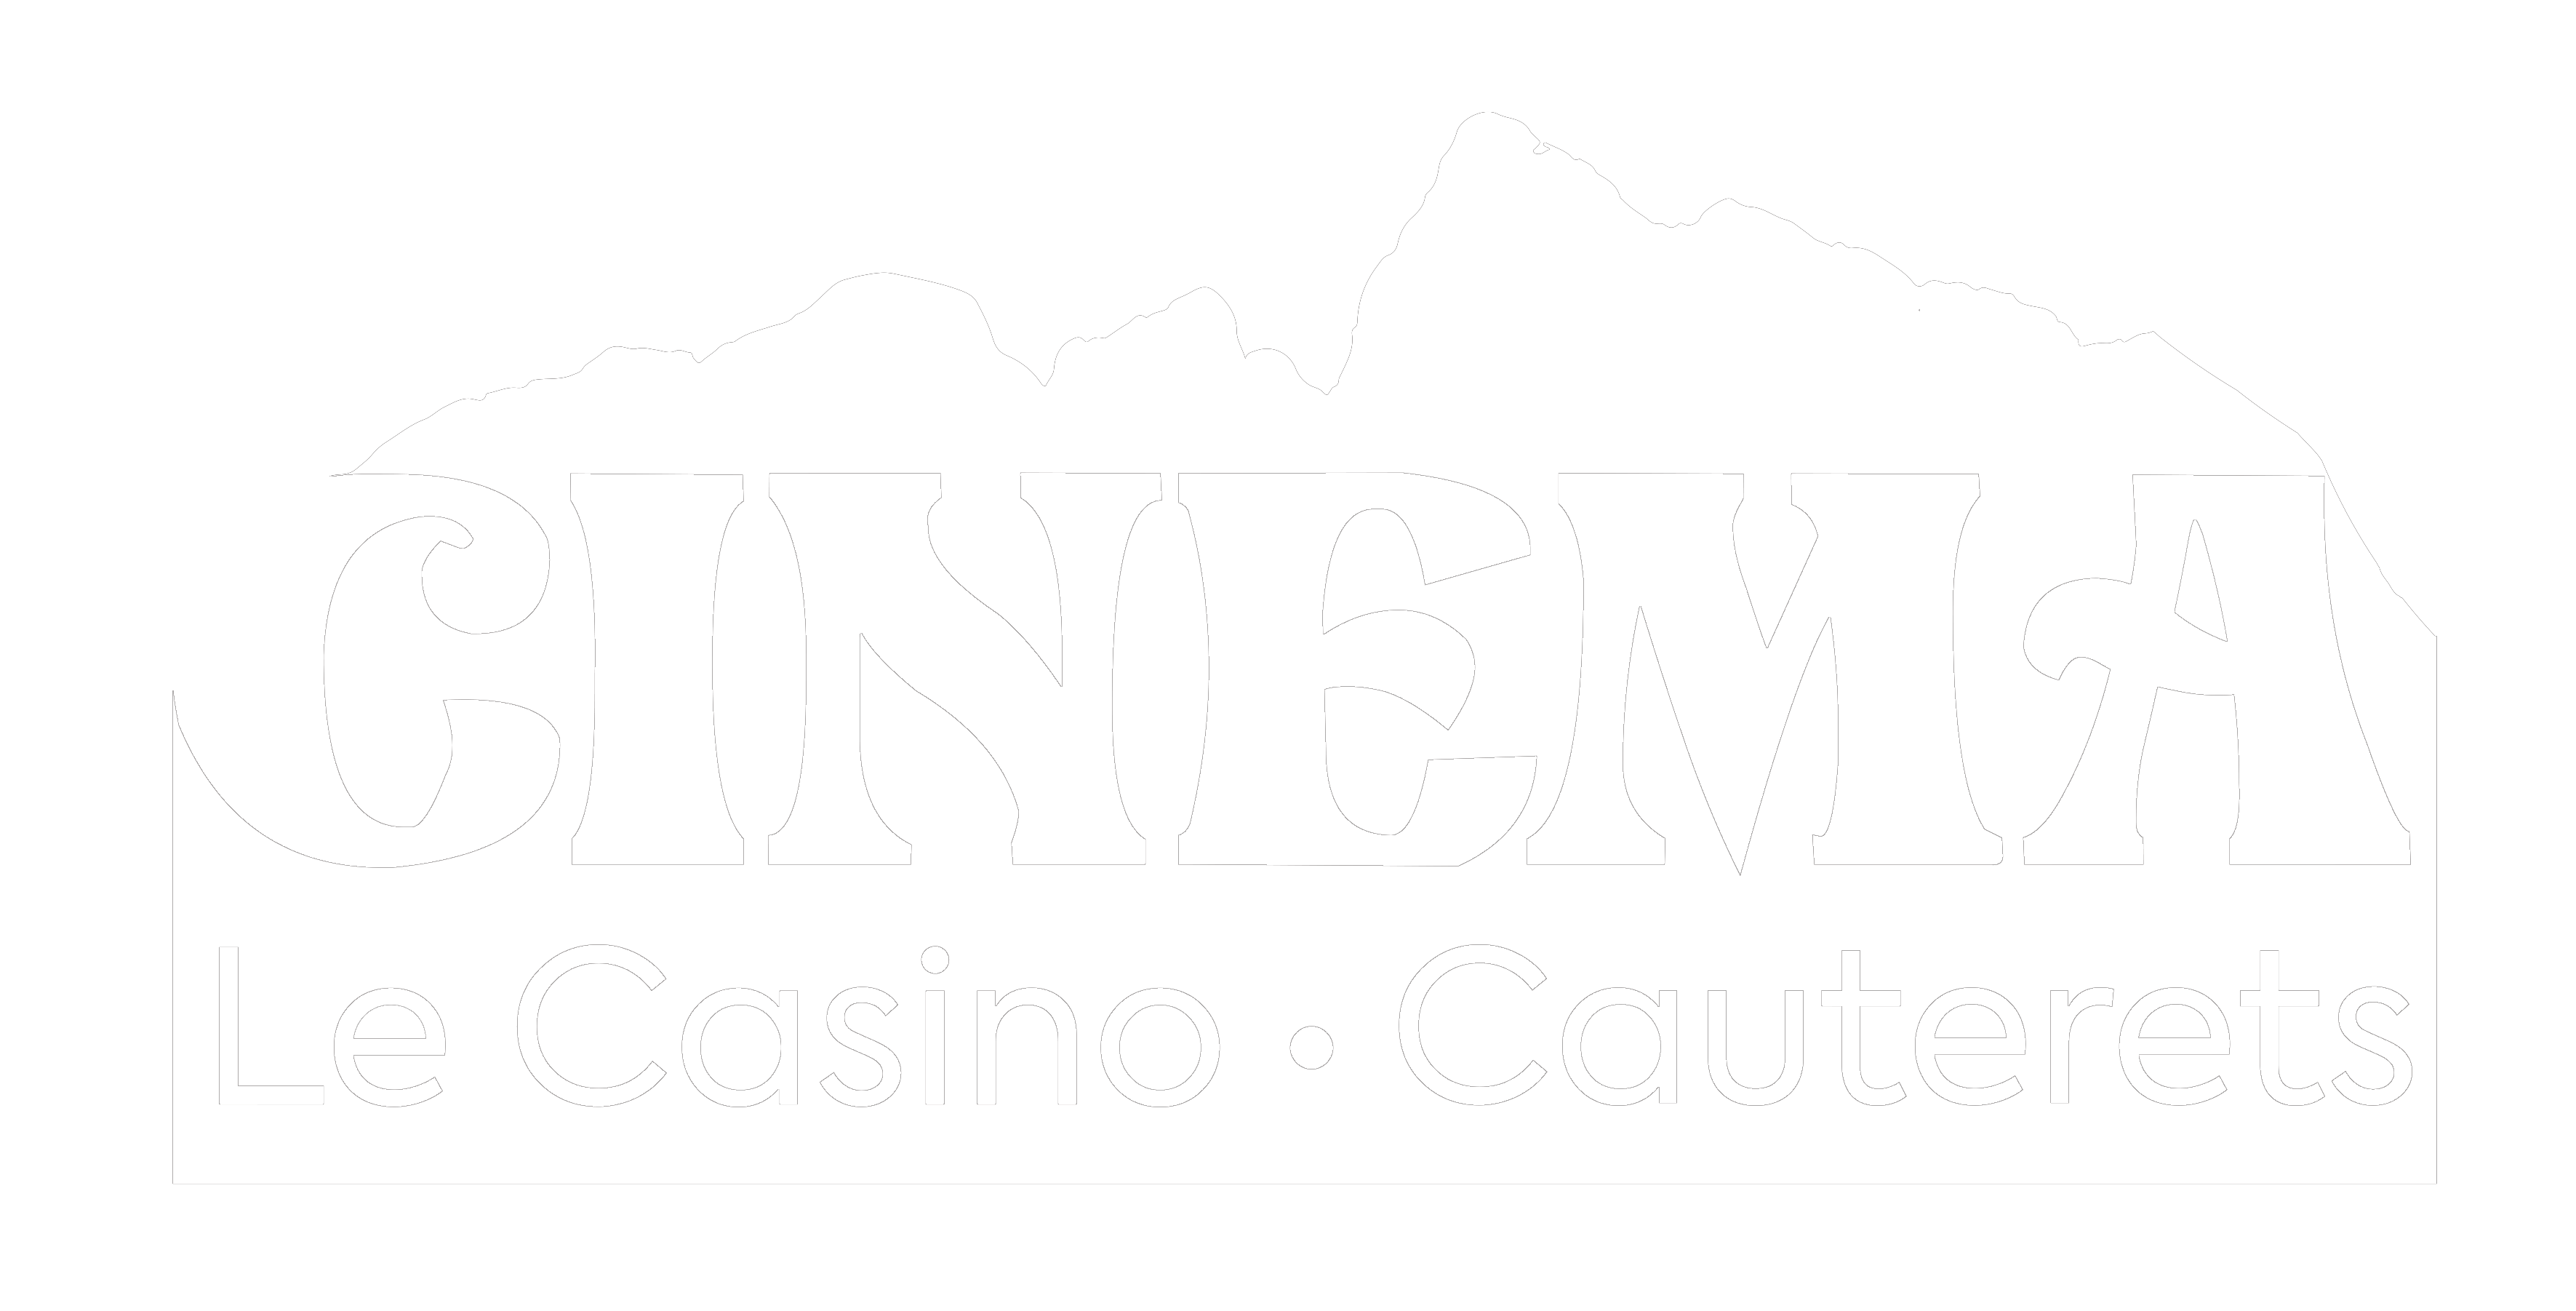 logo site cinema